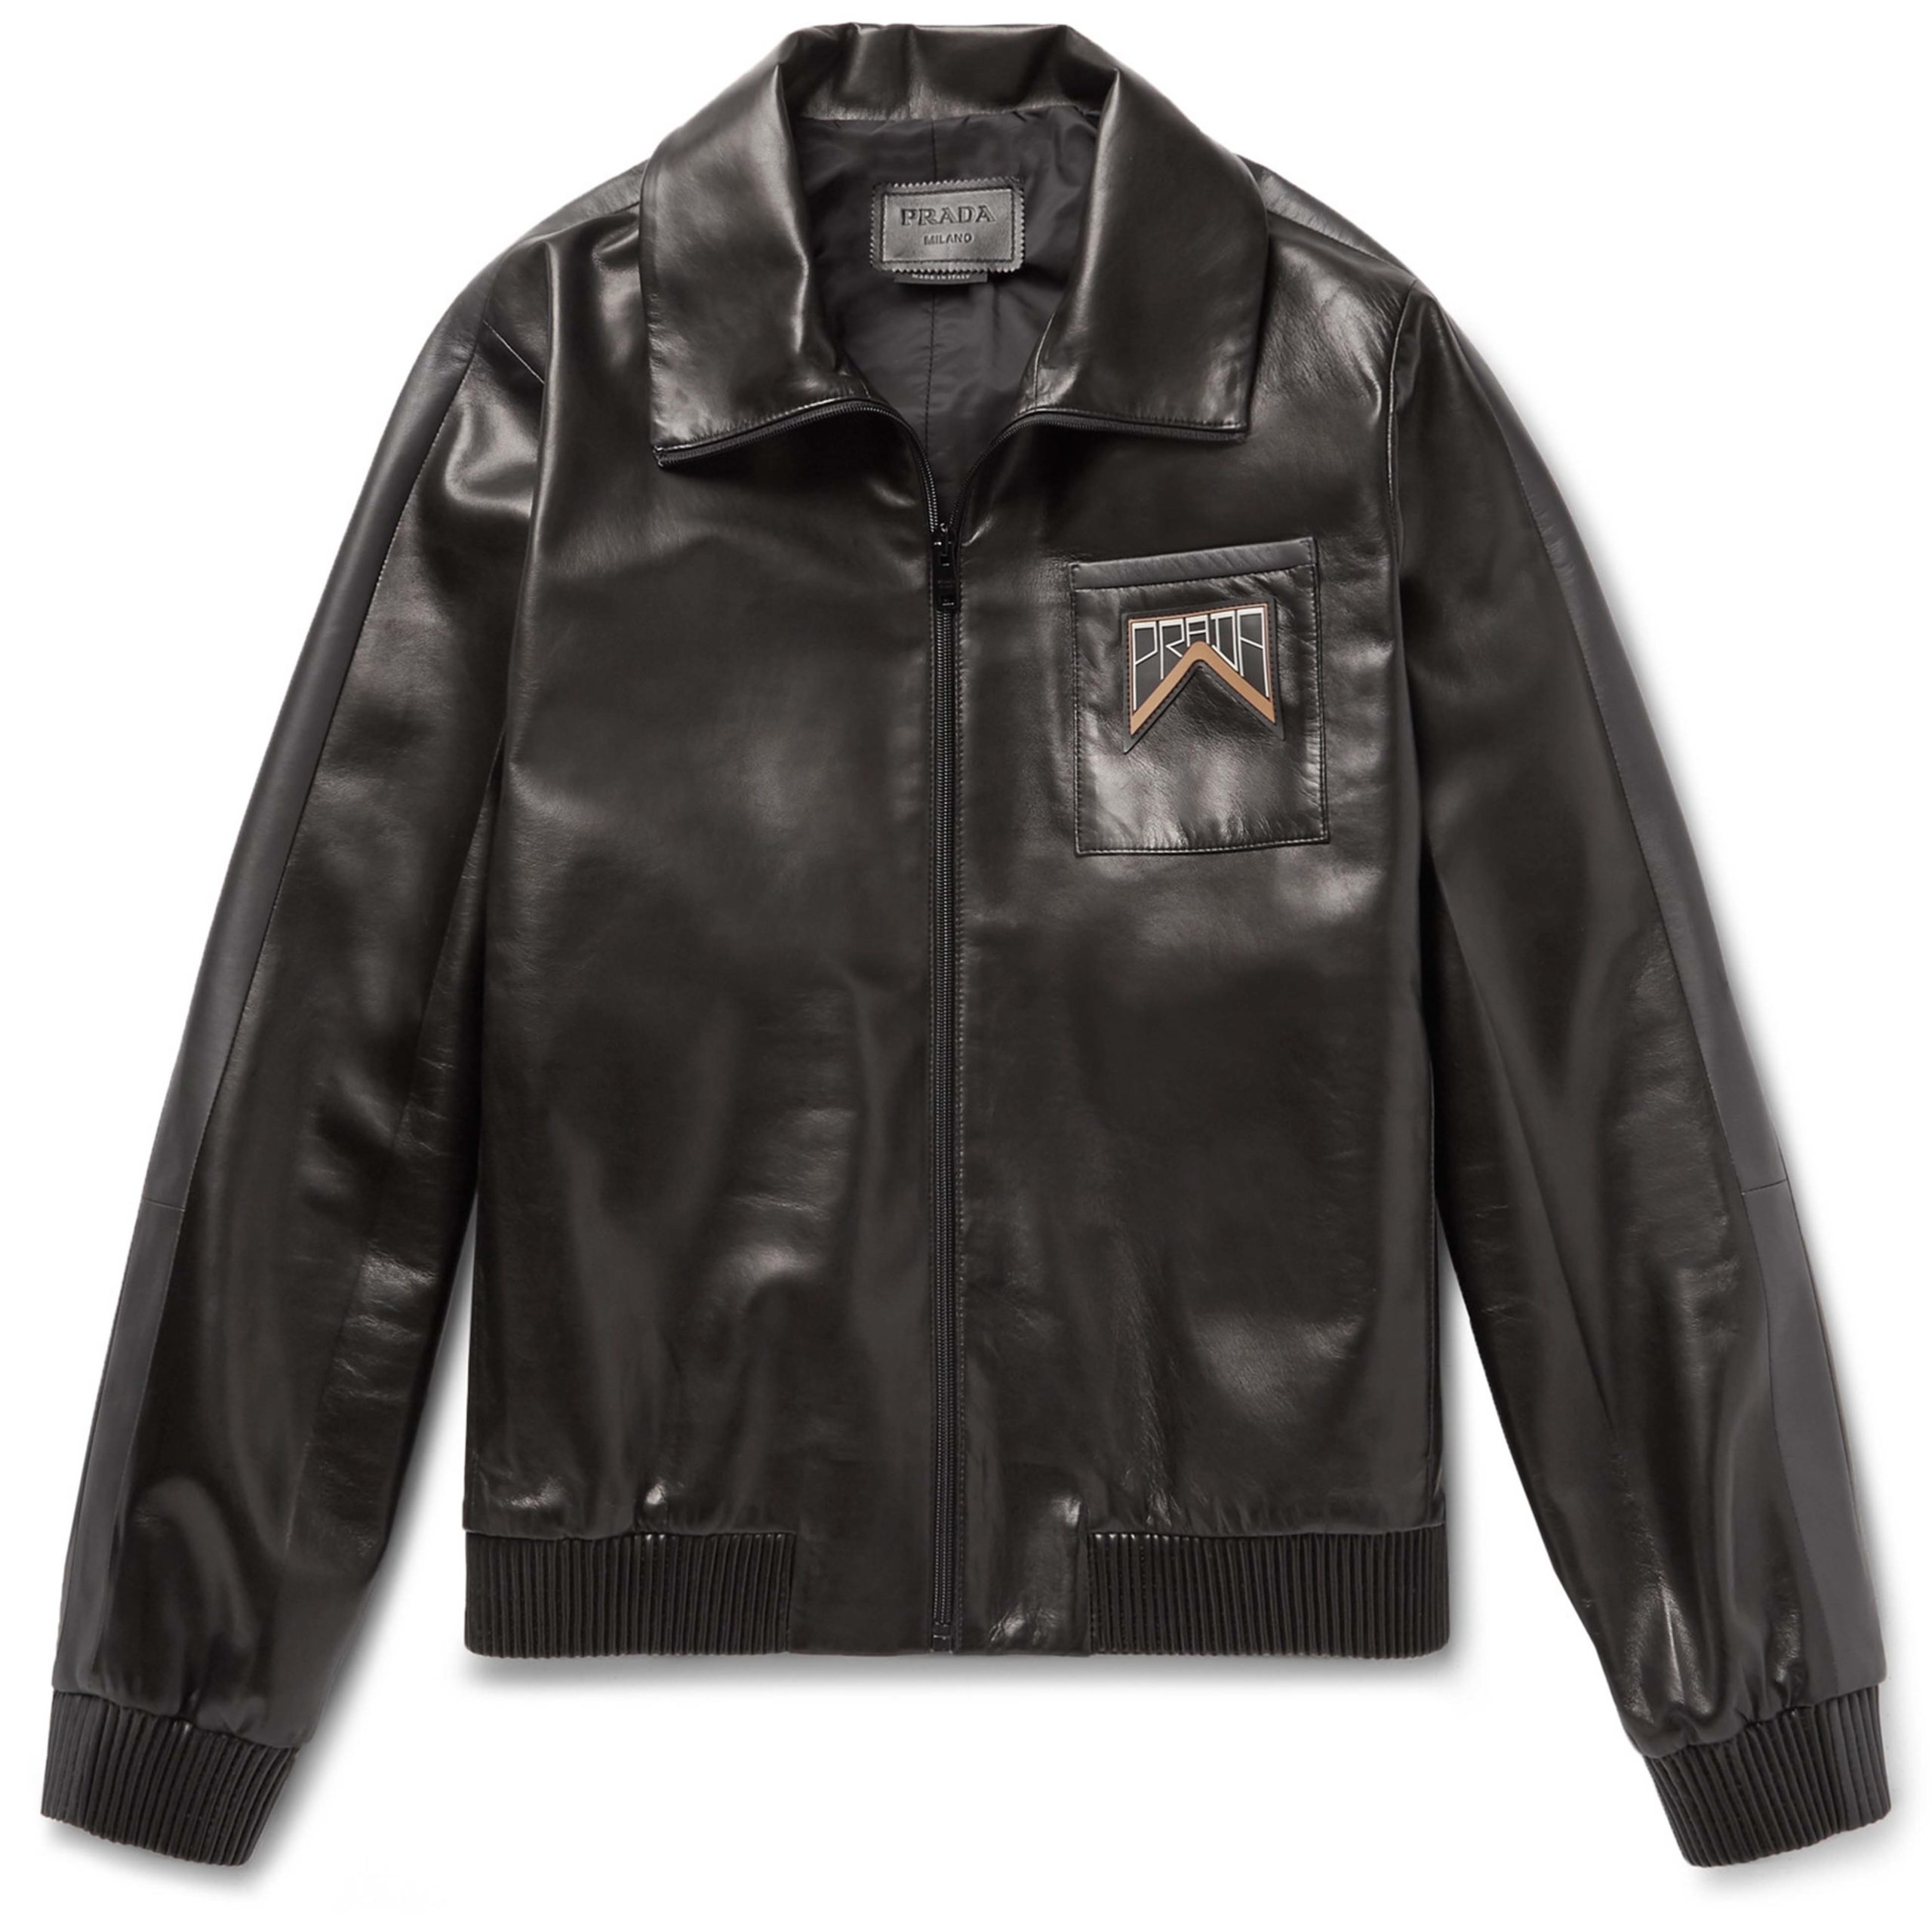 prada-leather-jacket | New Kiss on the Blog